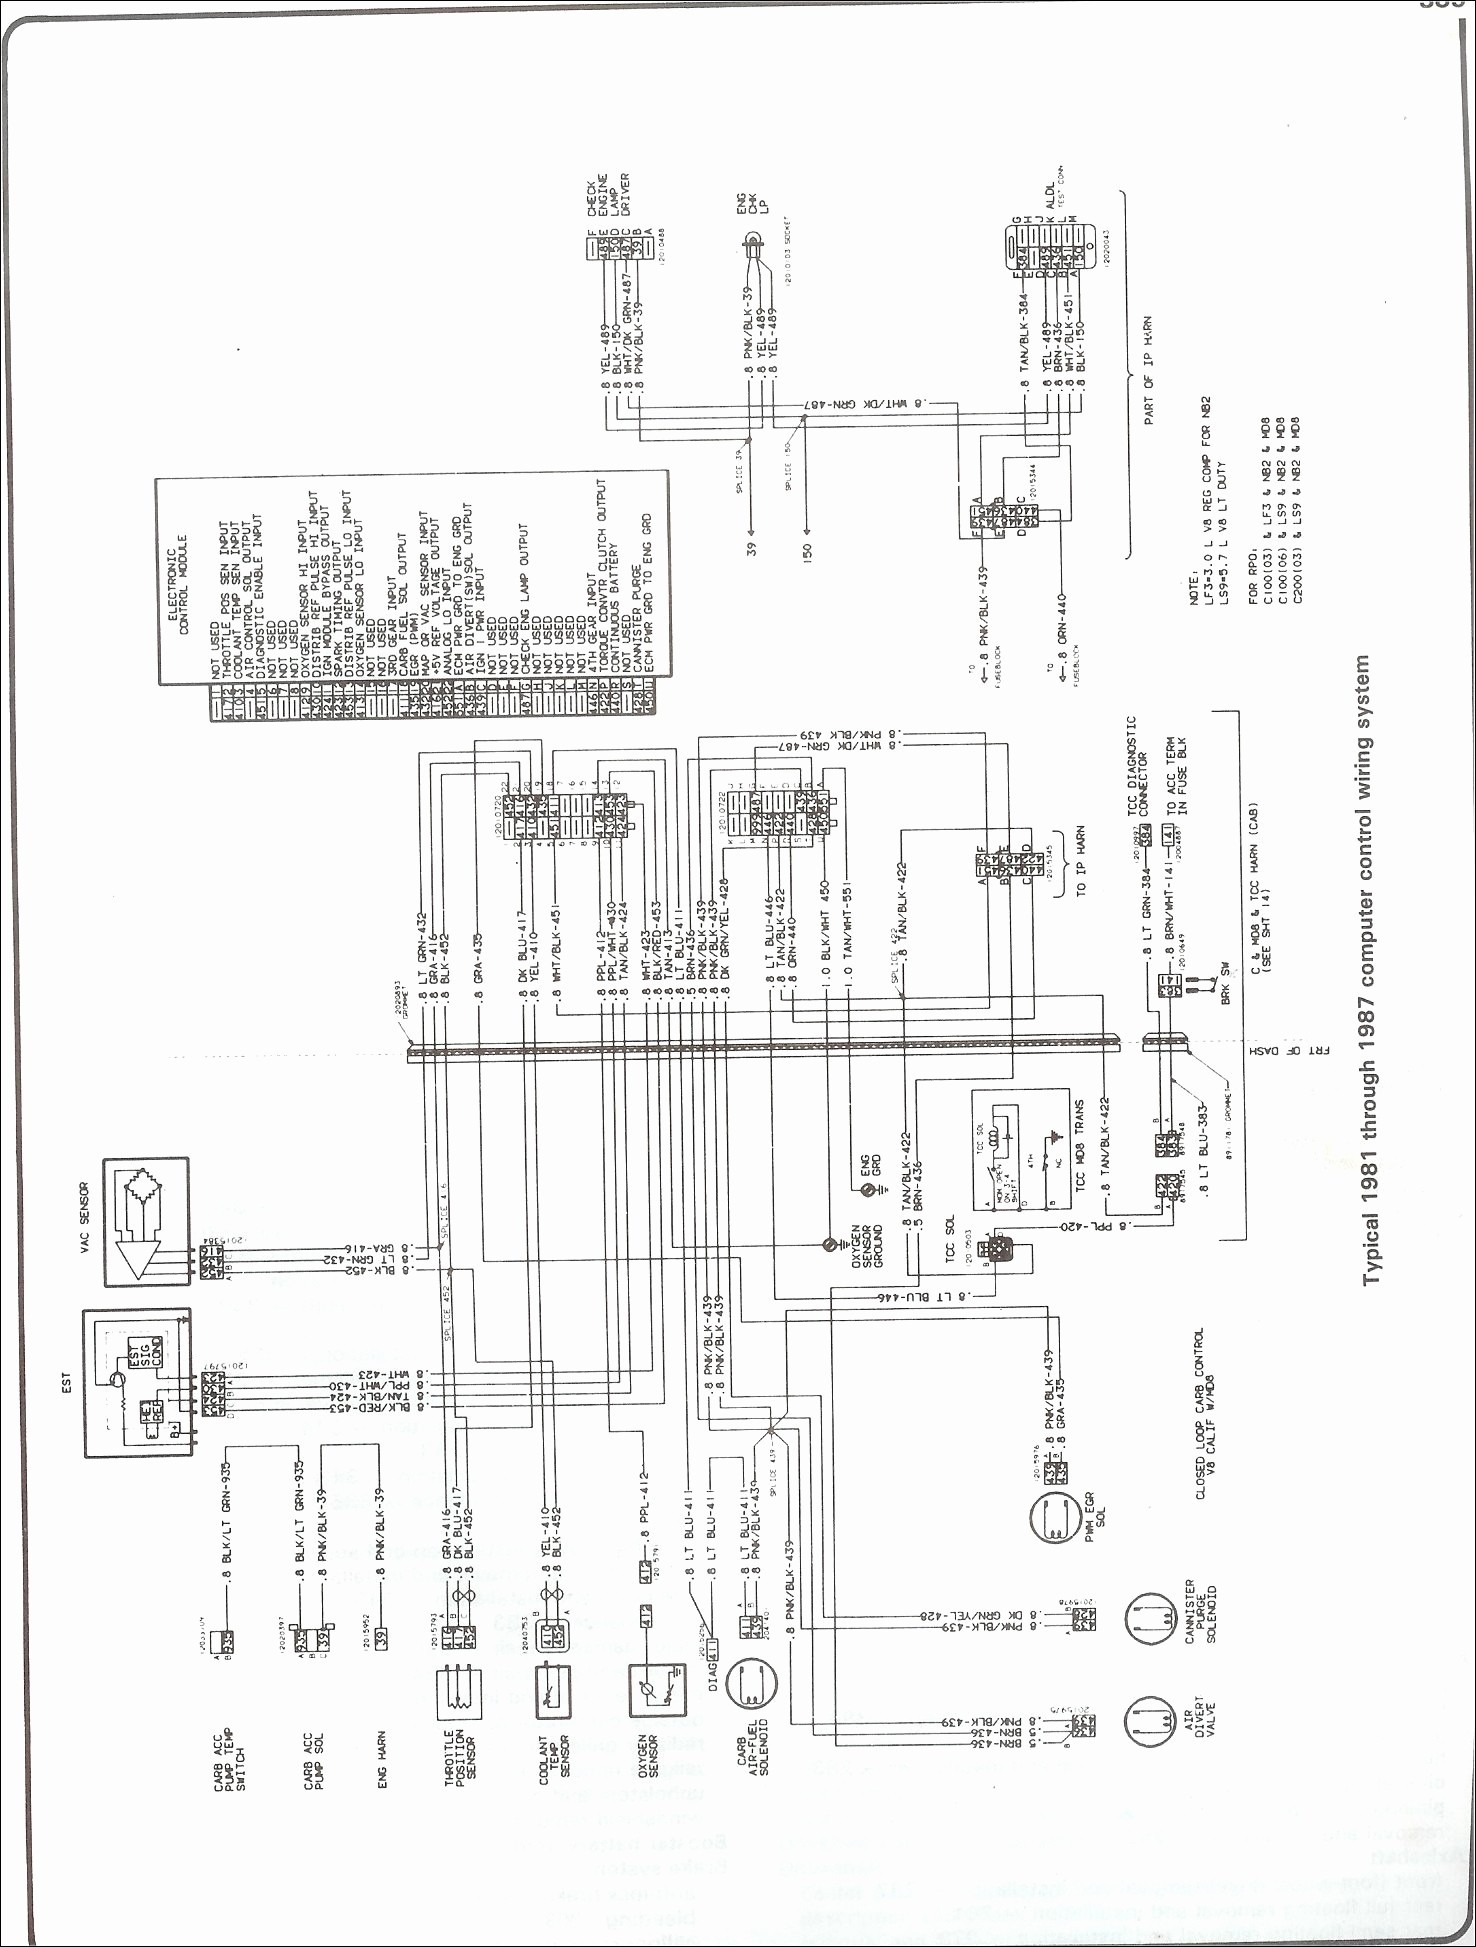 84 Chevy Truck Wiring Diagram 86 Chevy Truck Wiring Harness Wiring Diagram Datasource Of 84 Chevy Truck Wiring Diagram